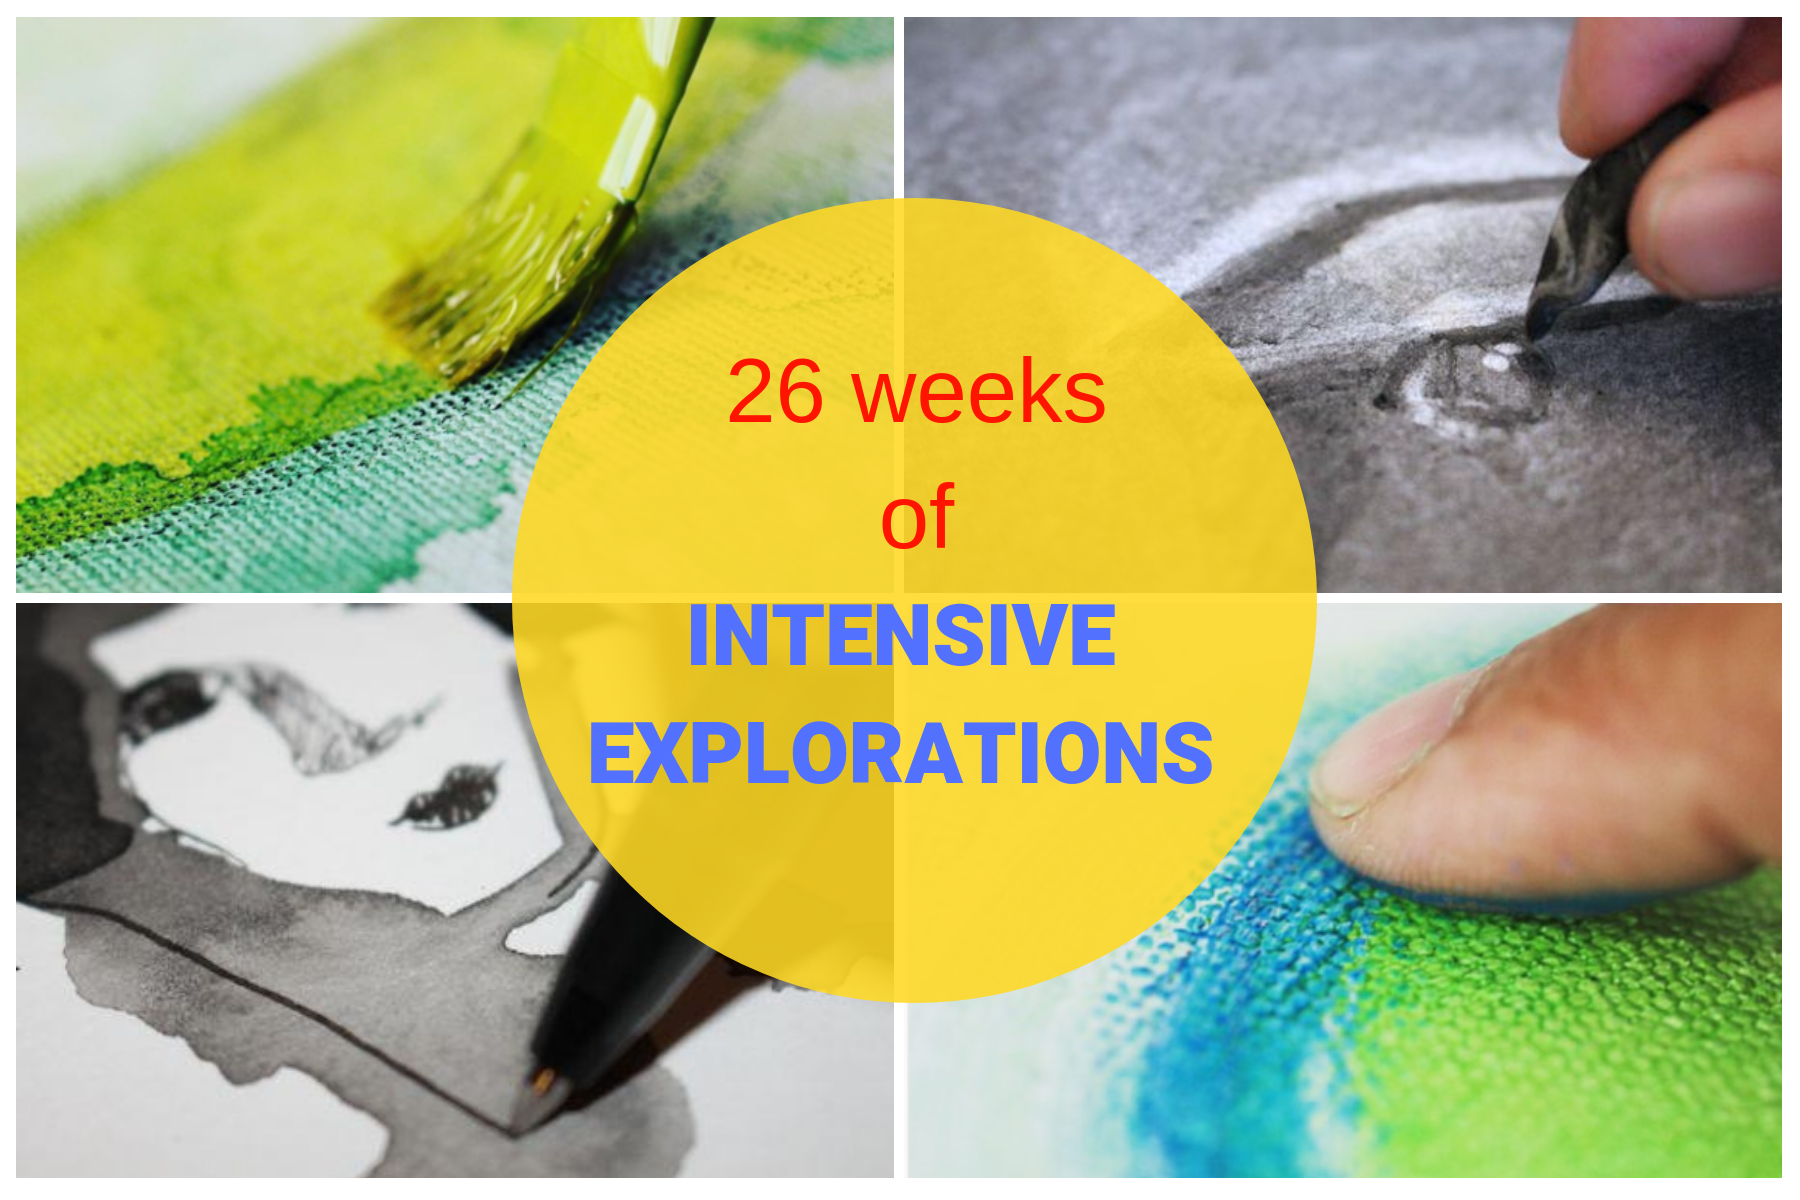 26 weeks of intensive explorations